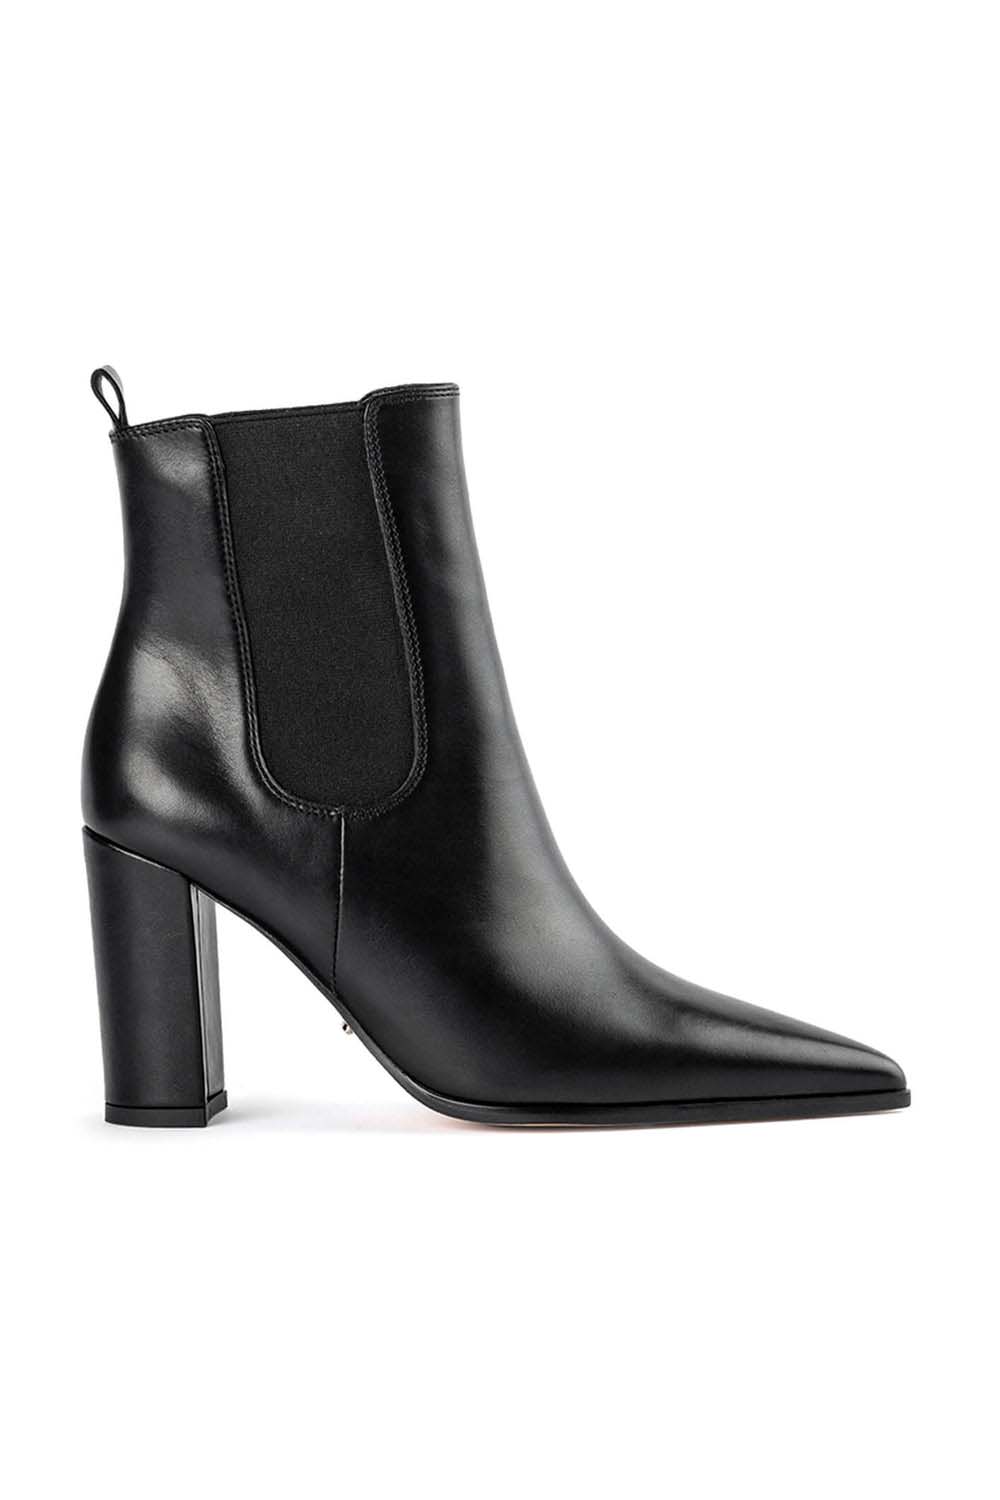 Black Tony Bianco Easton 8.5cm Women's Ankle Boots | 7082-DSHOU